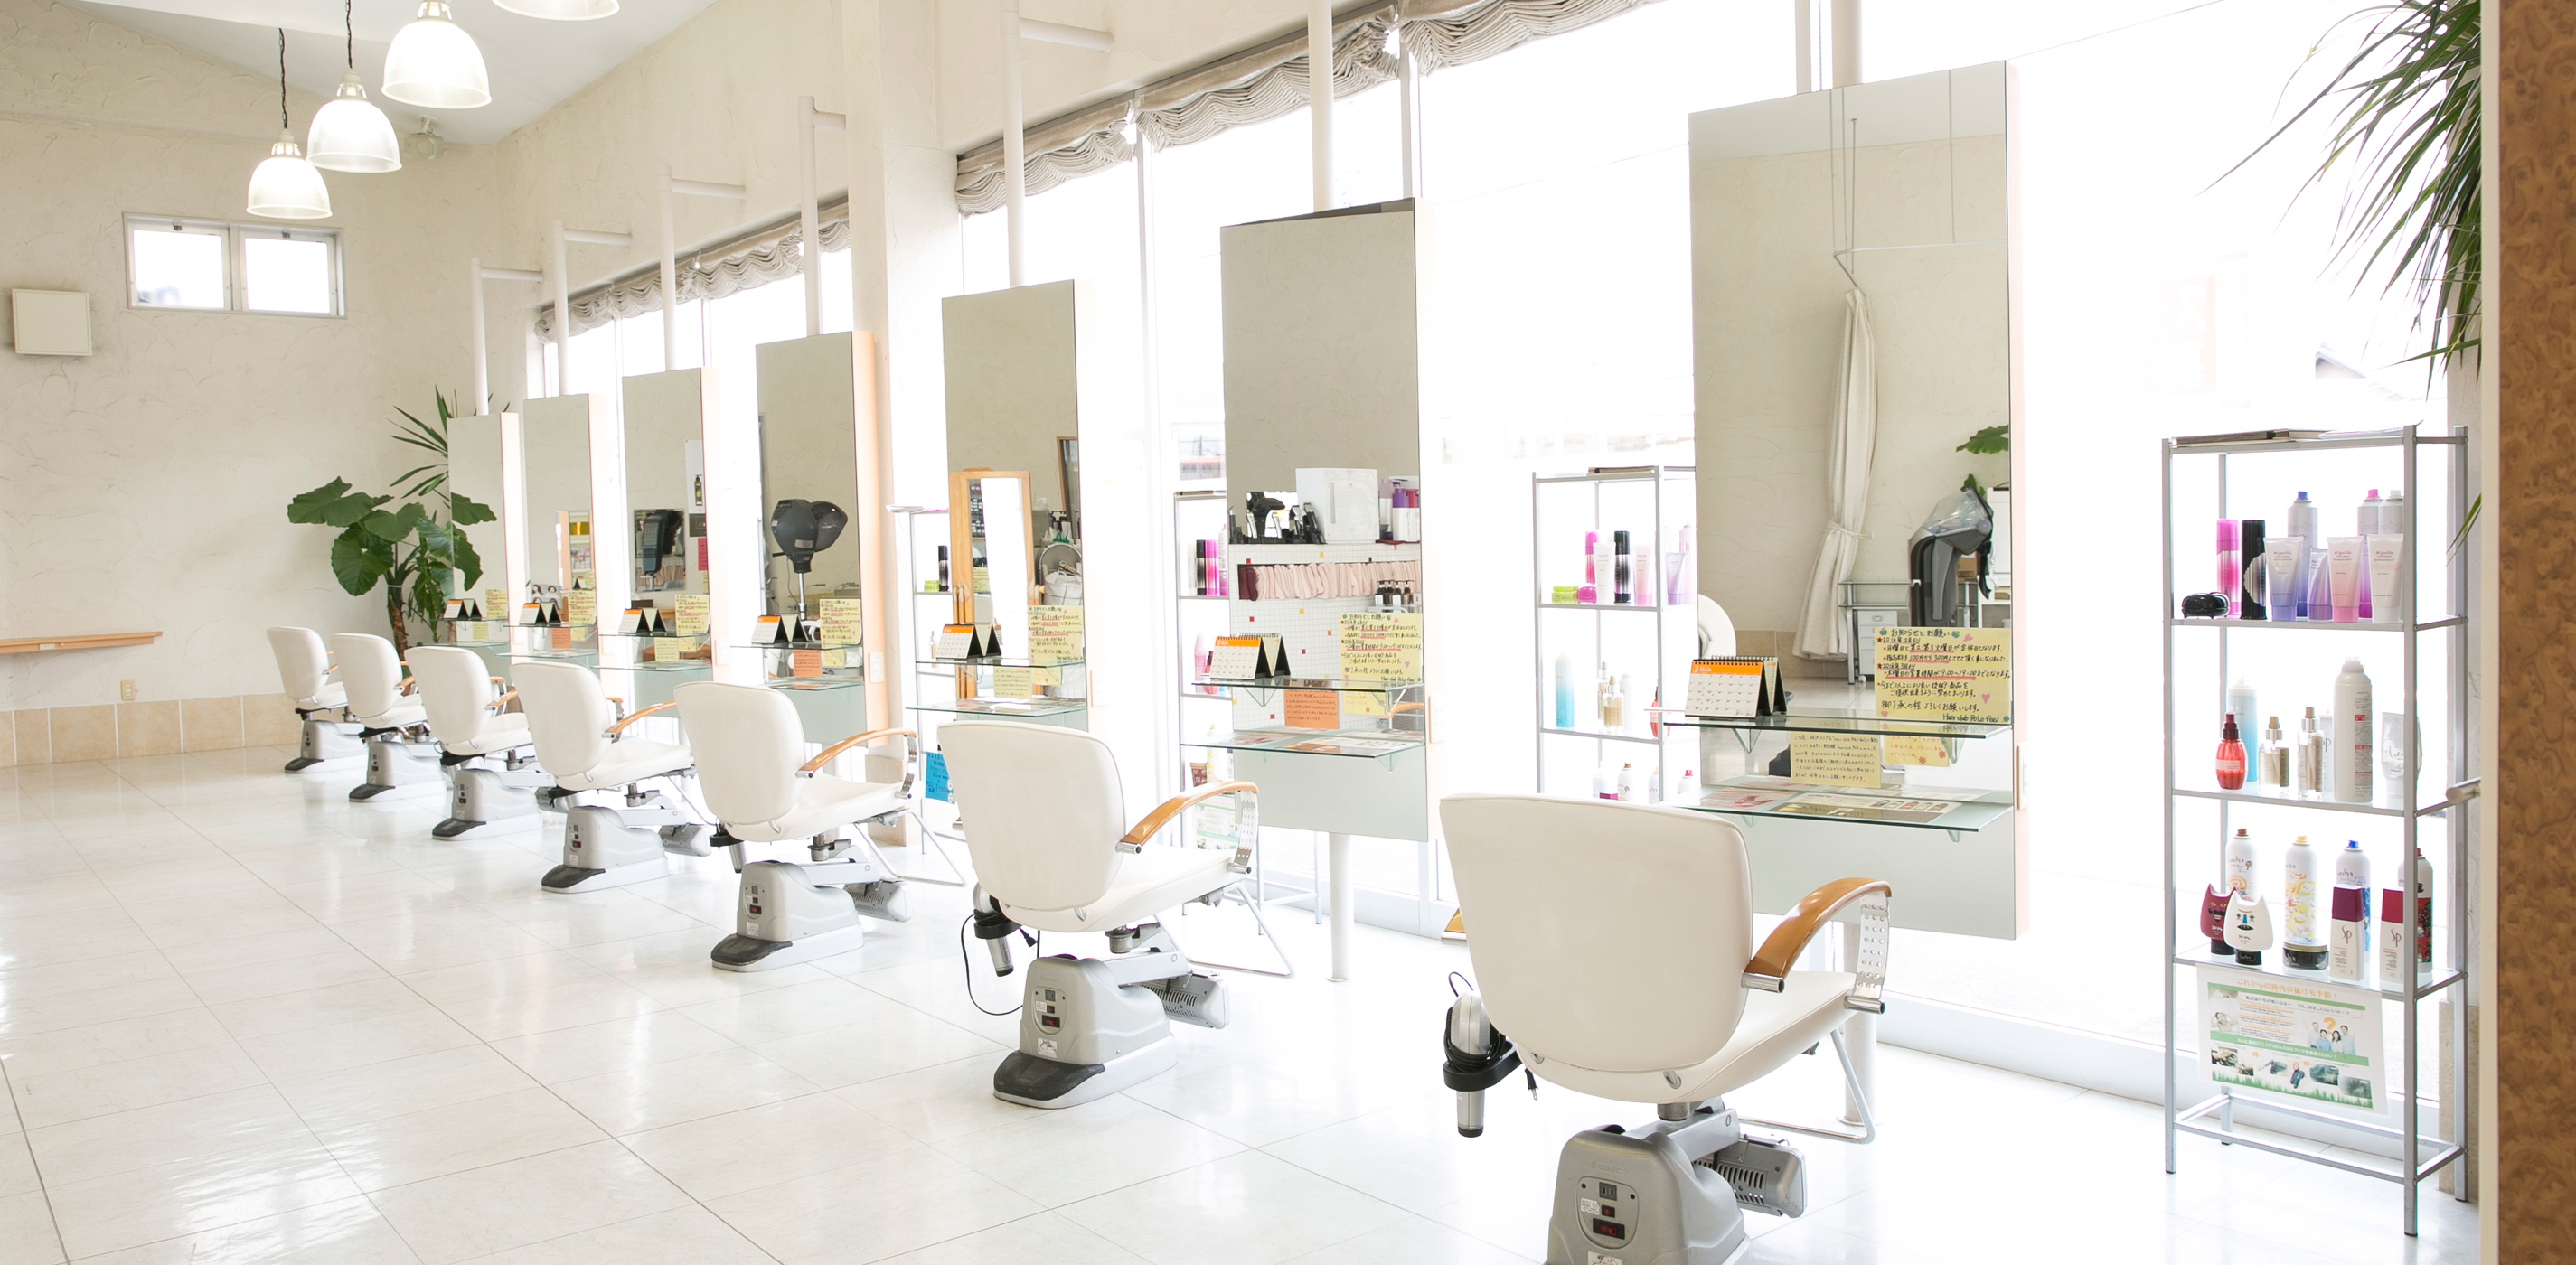 Hair Club Polo 稲沢市にpolo Feel あま市にpolo Amaの2店舗の美容室を展開しています